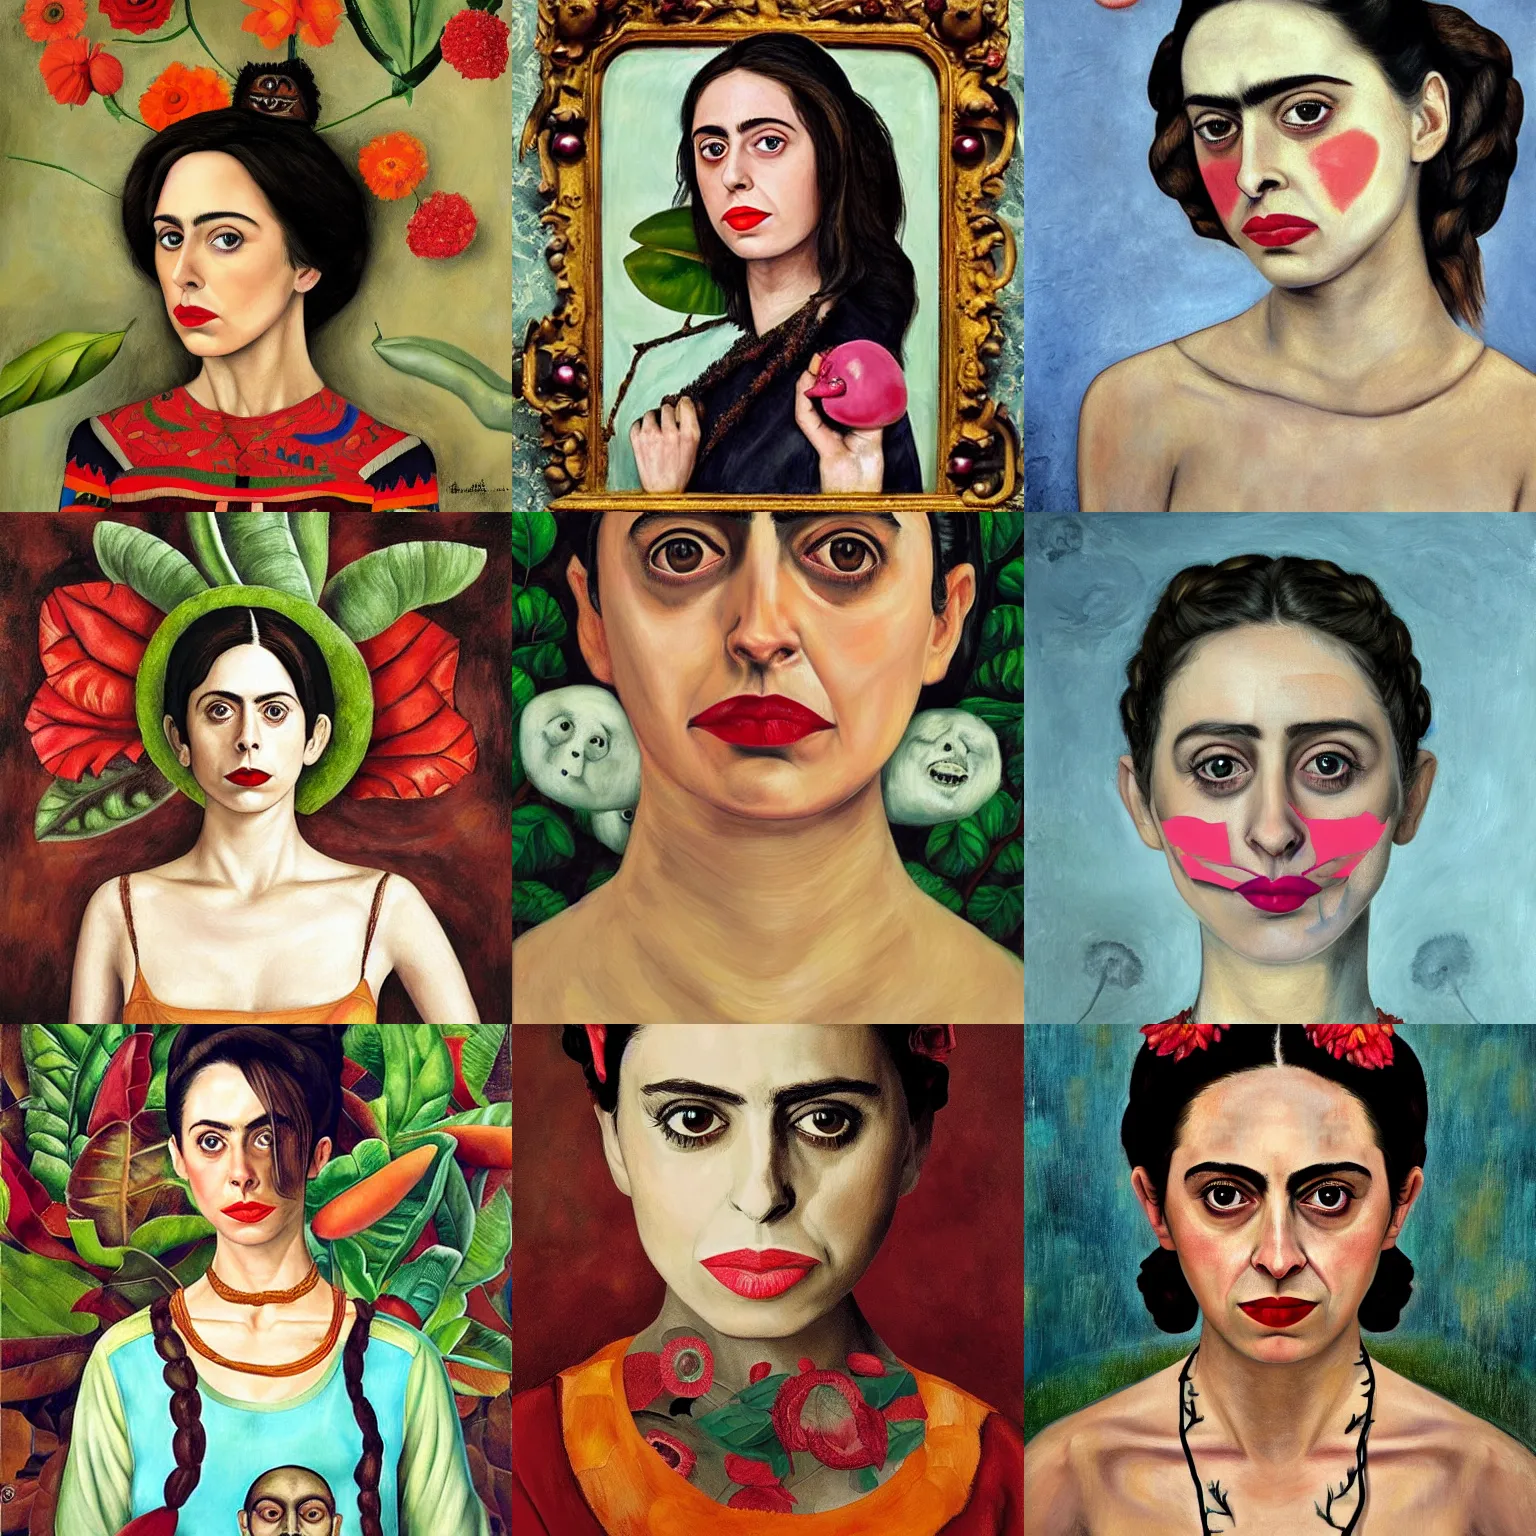 Prompt: Alison Brie surreal portrait by Frida Kahlo